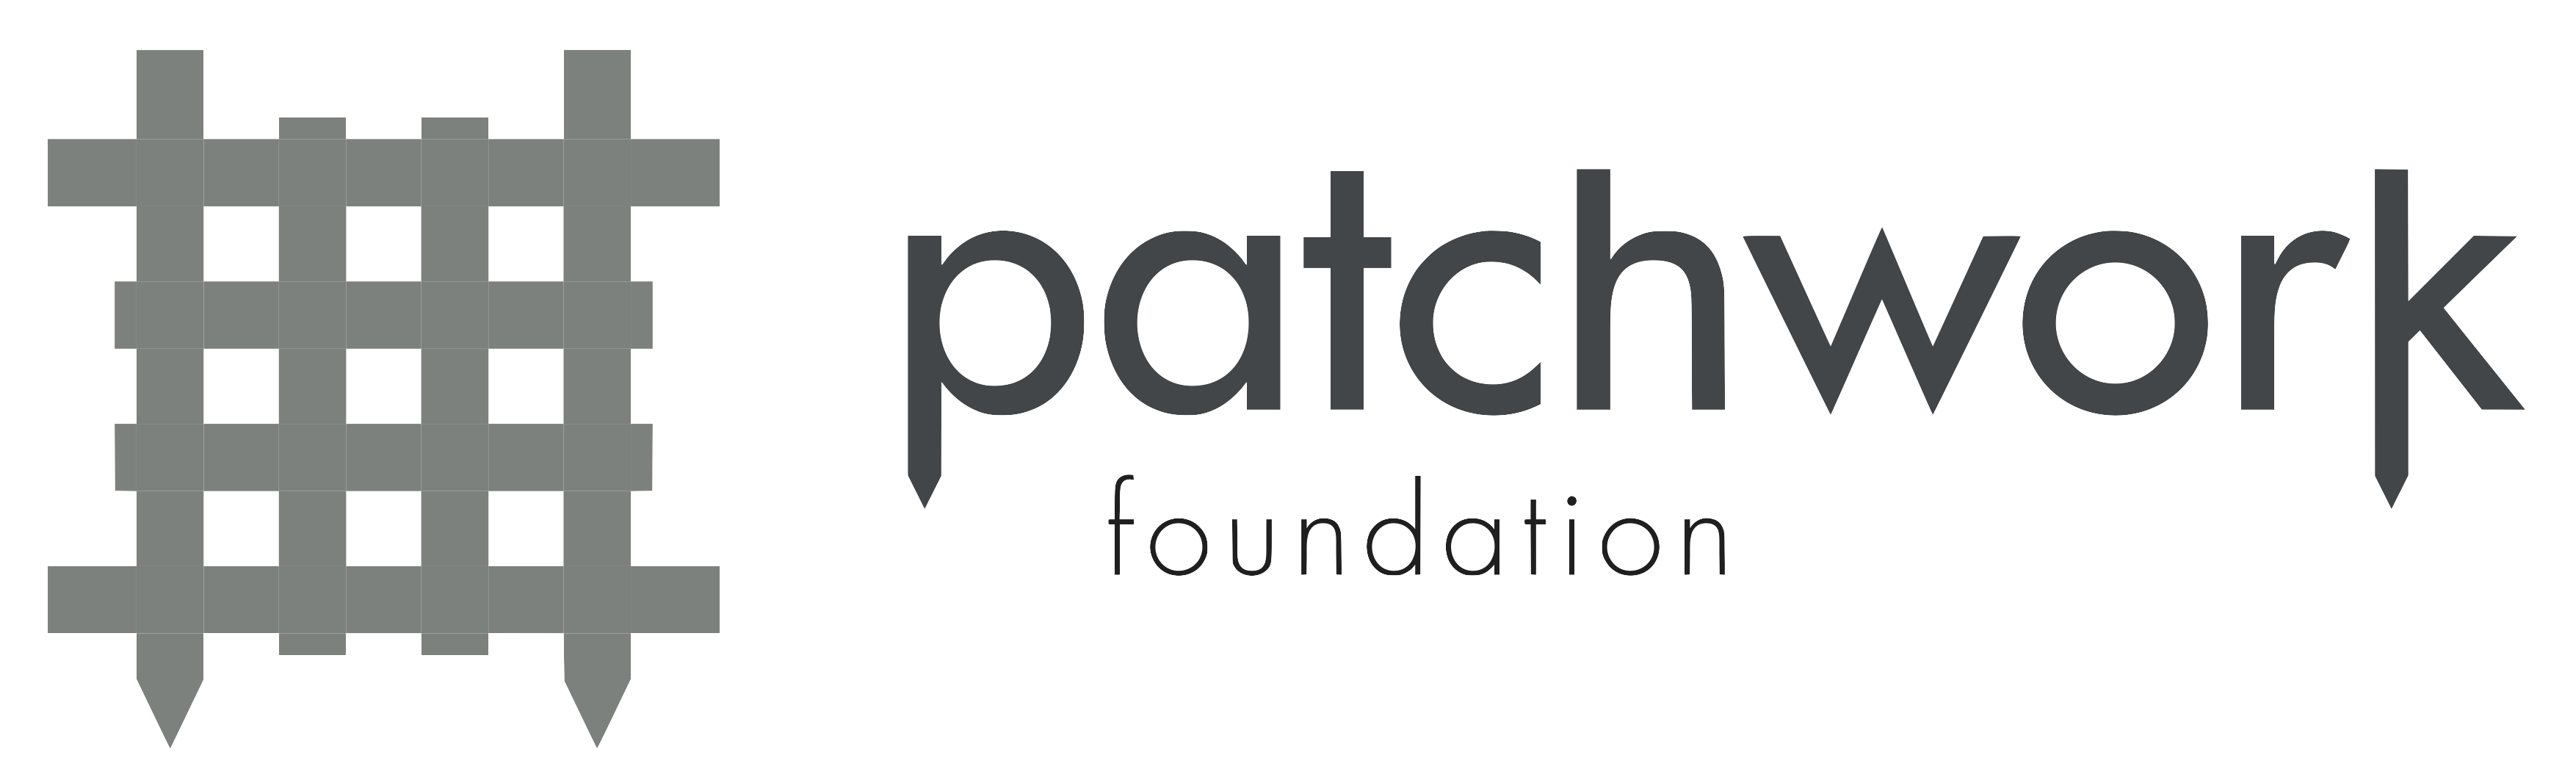 logo for Patchwork Foundation